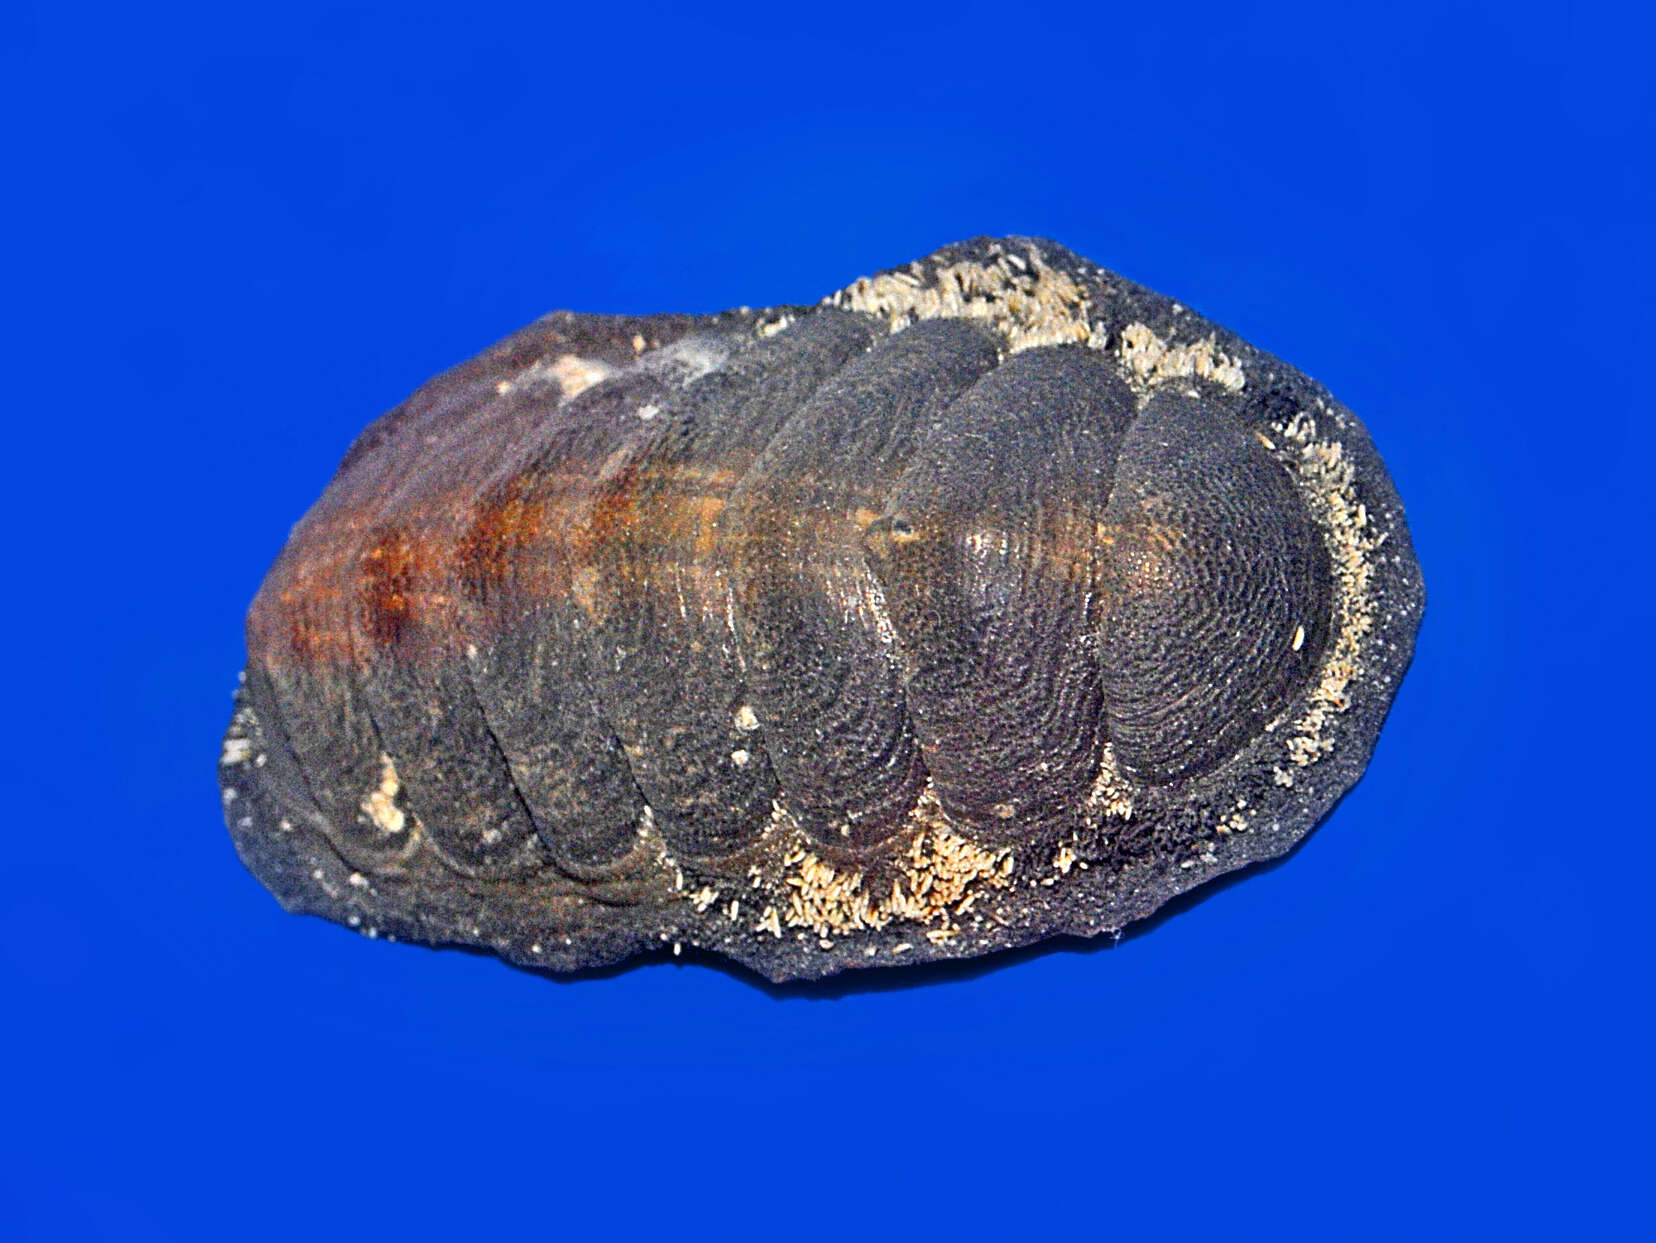 Sivun Acanthopleura gemmata (Blainville 1825) kuva